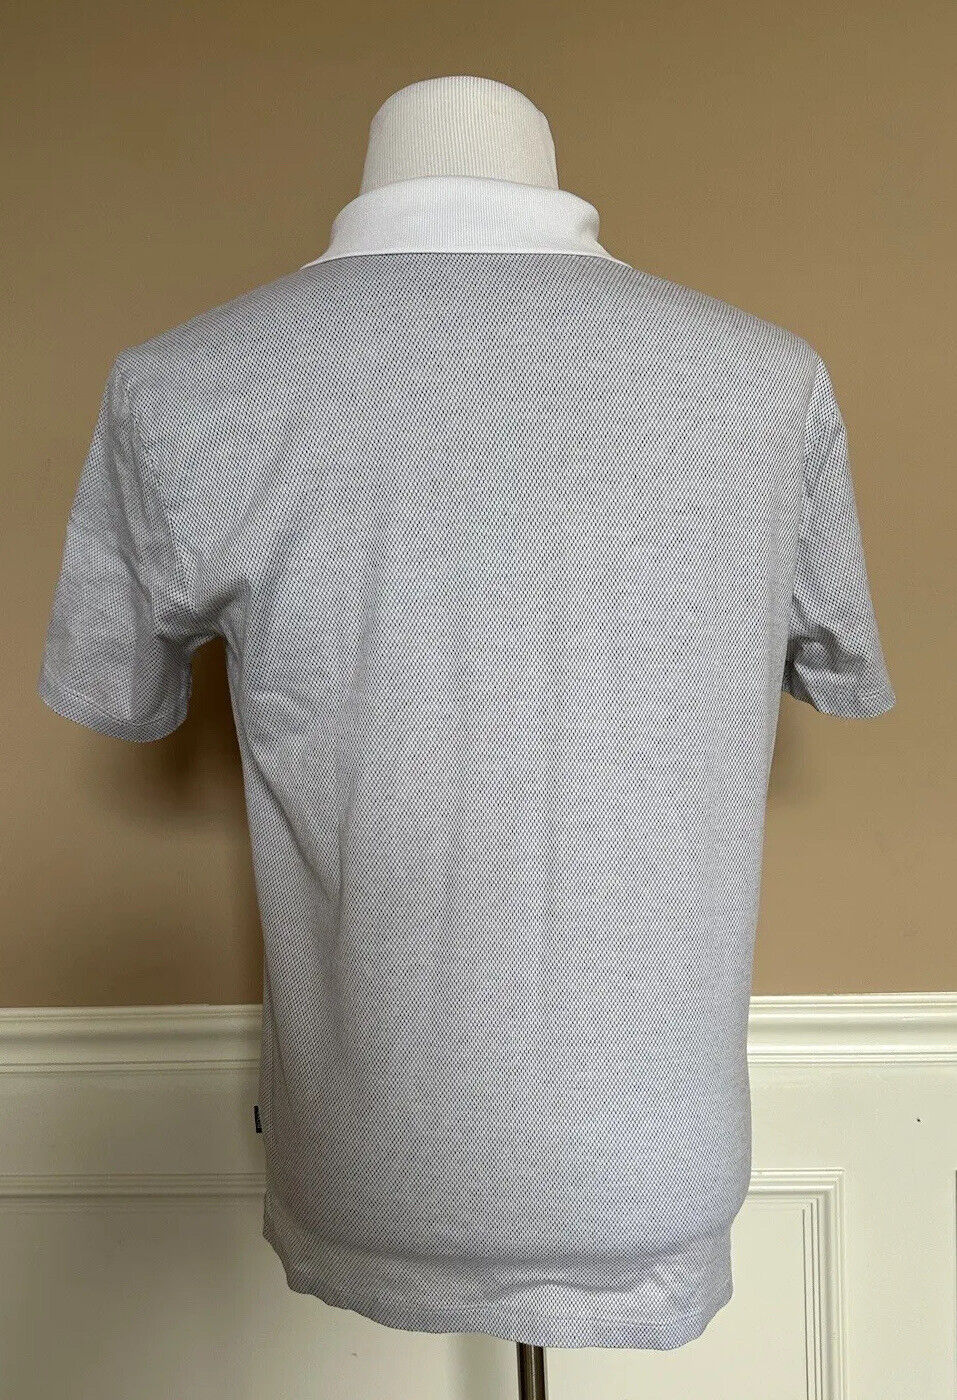 Бело-синяя рубашка-поло с короткими рукавами Boss Hugo Boss Black Label L (подходит как SM)